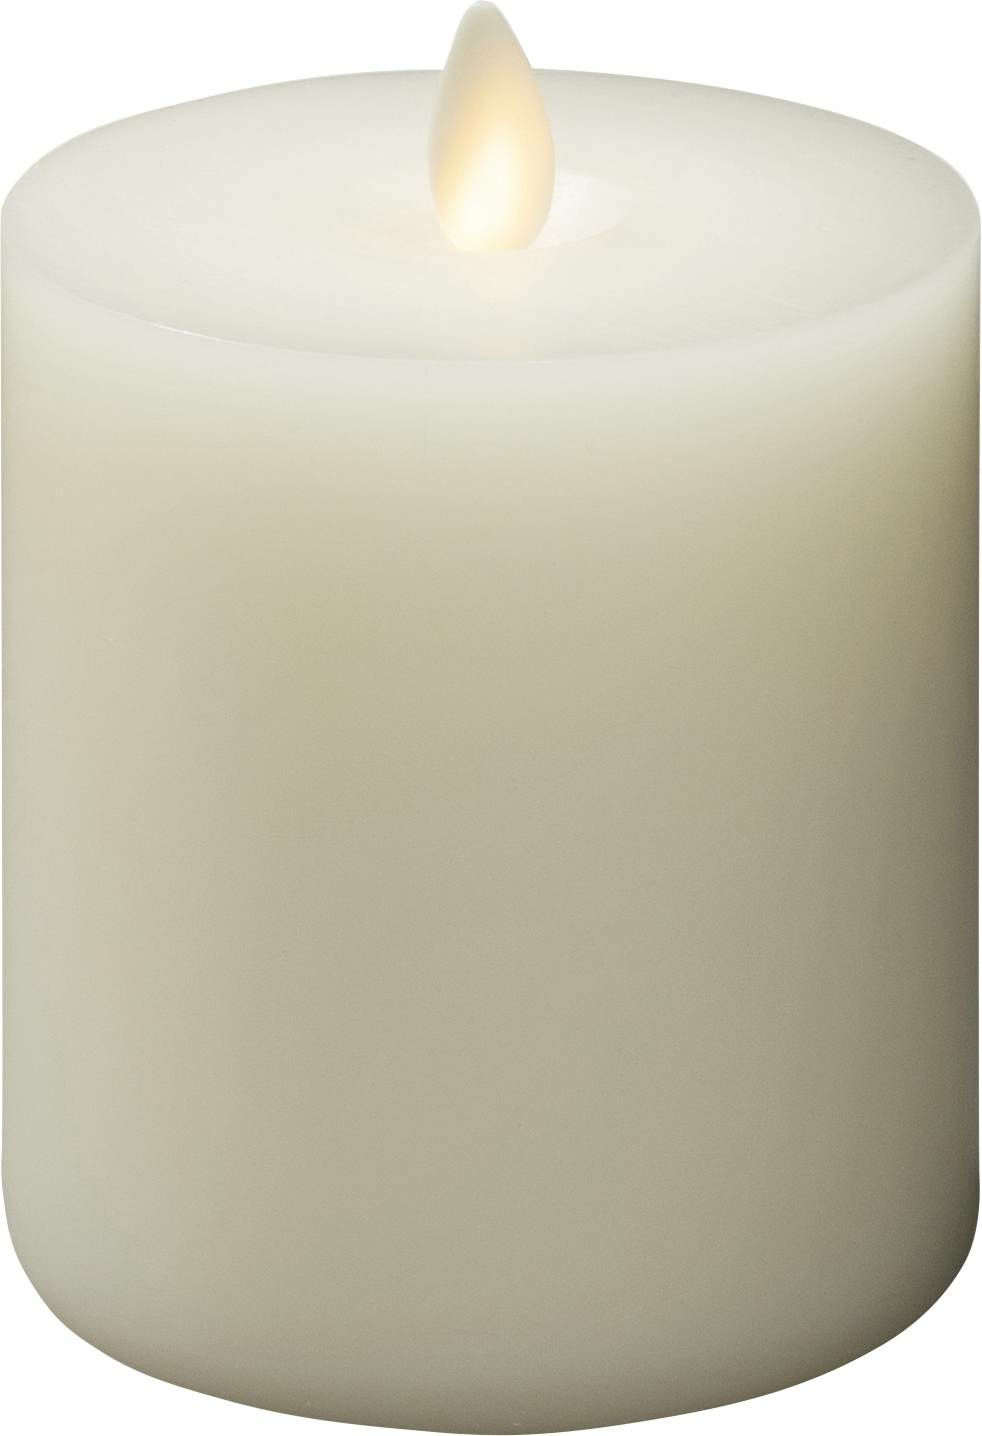 Konstsmide LED-Echtwachskerze Wachskerze Creme-Weiß Warmweiß Ø x H 81 x 101 mm